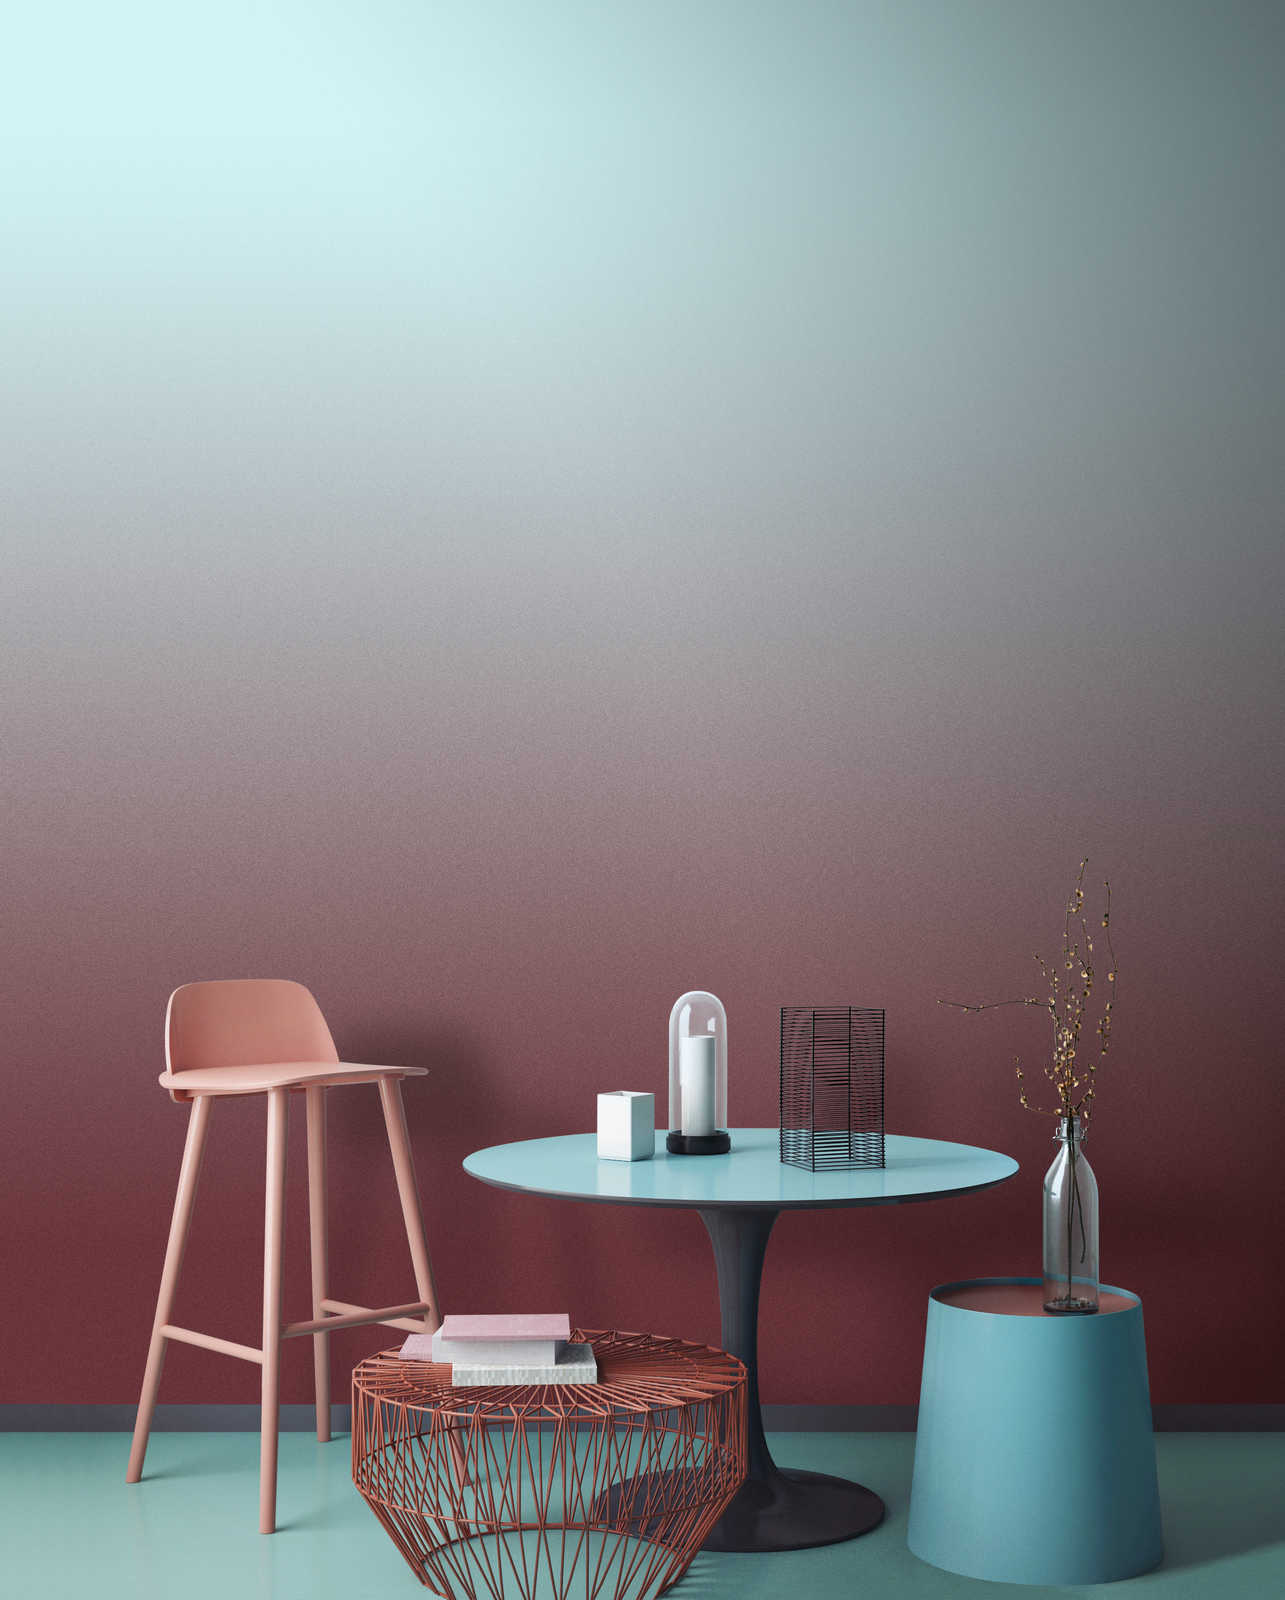             Colour Studio 3 – Ombre Fototapete Hellblau & Weinrot mit Farbverlauf
        